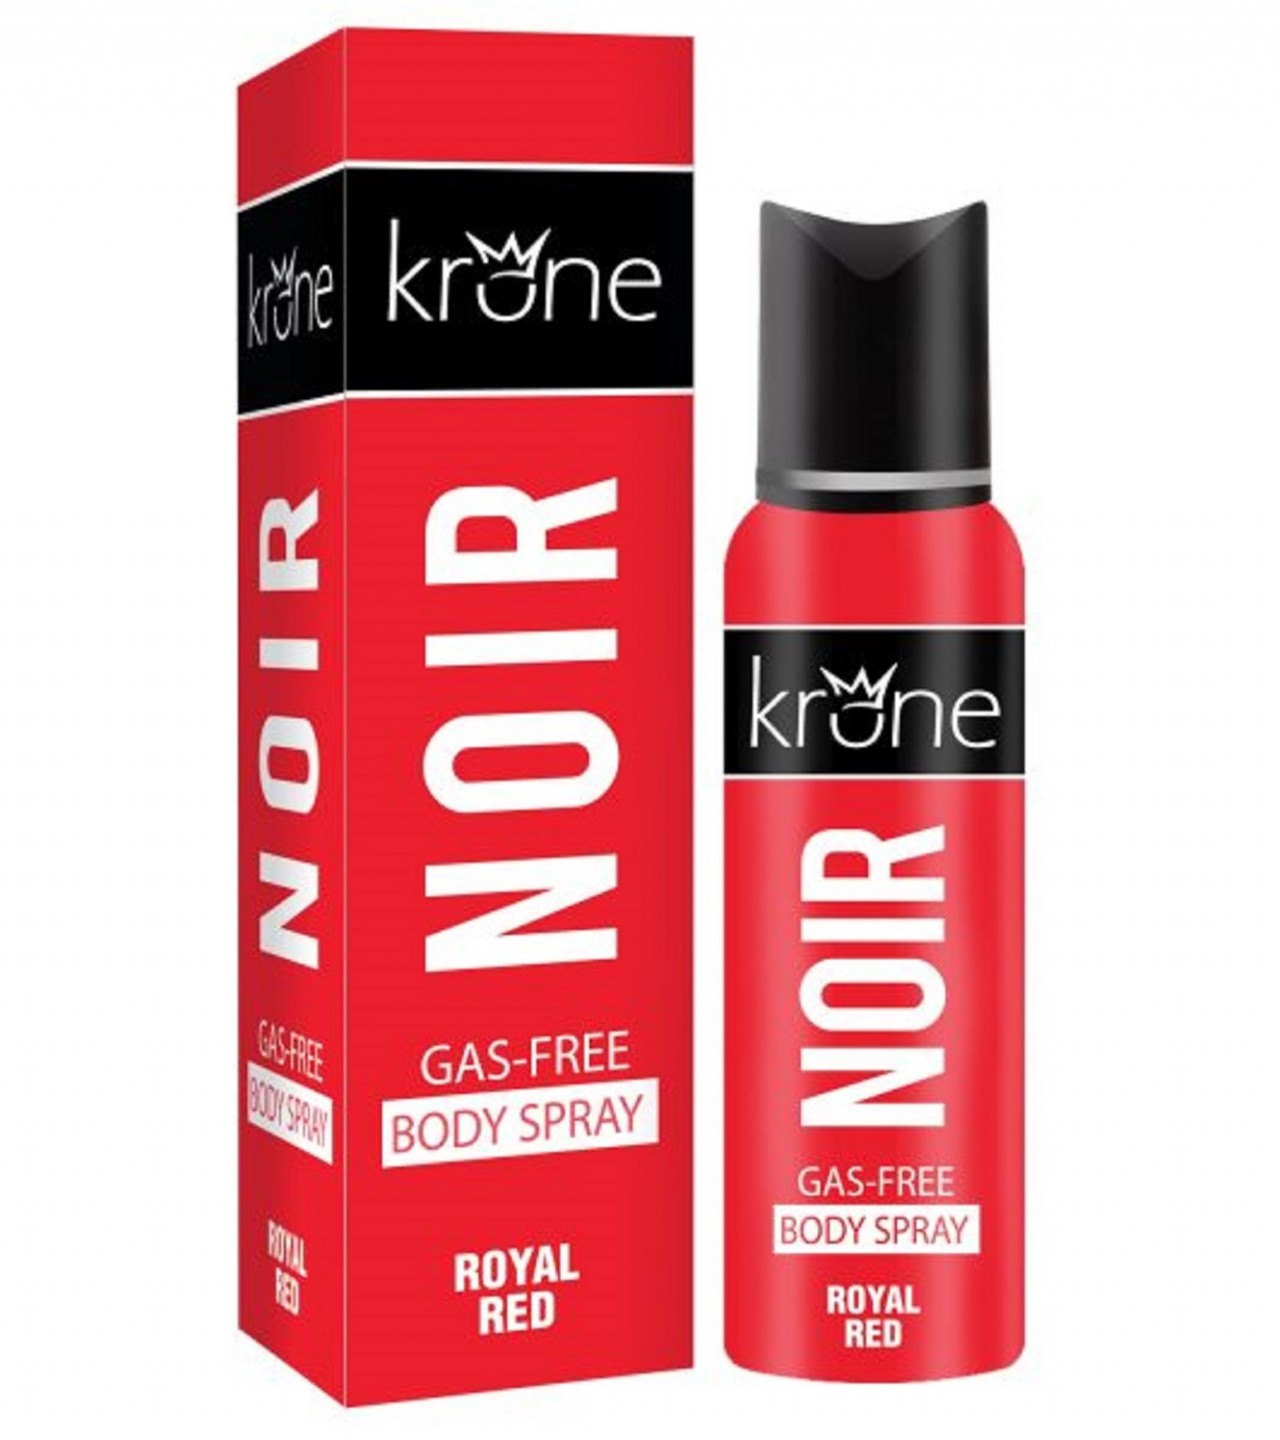 Krone Noir Royal Red Perfume Body Spray - 120 ml